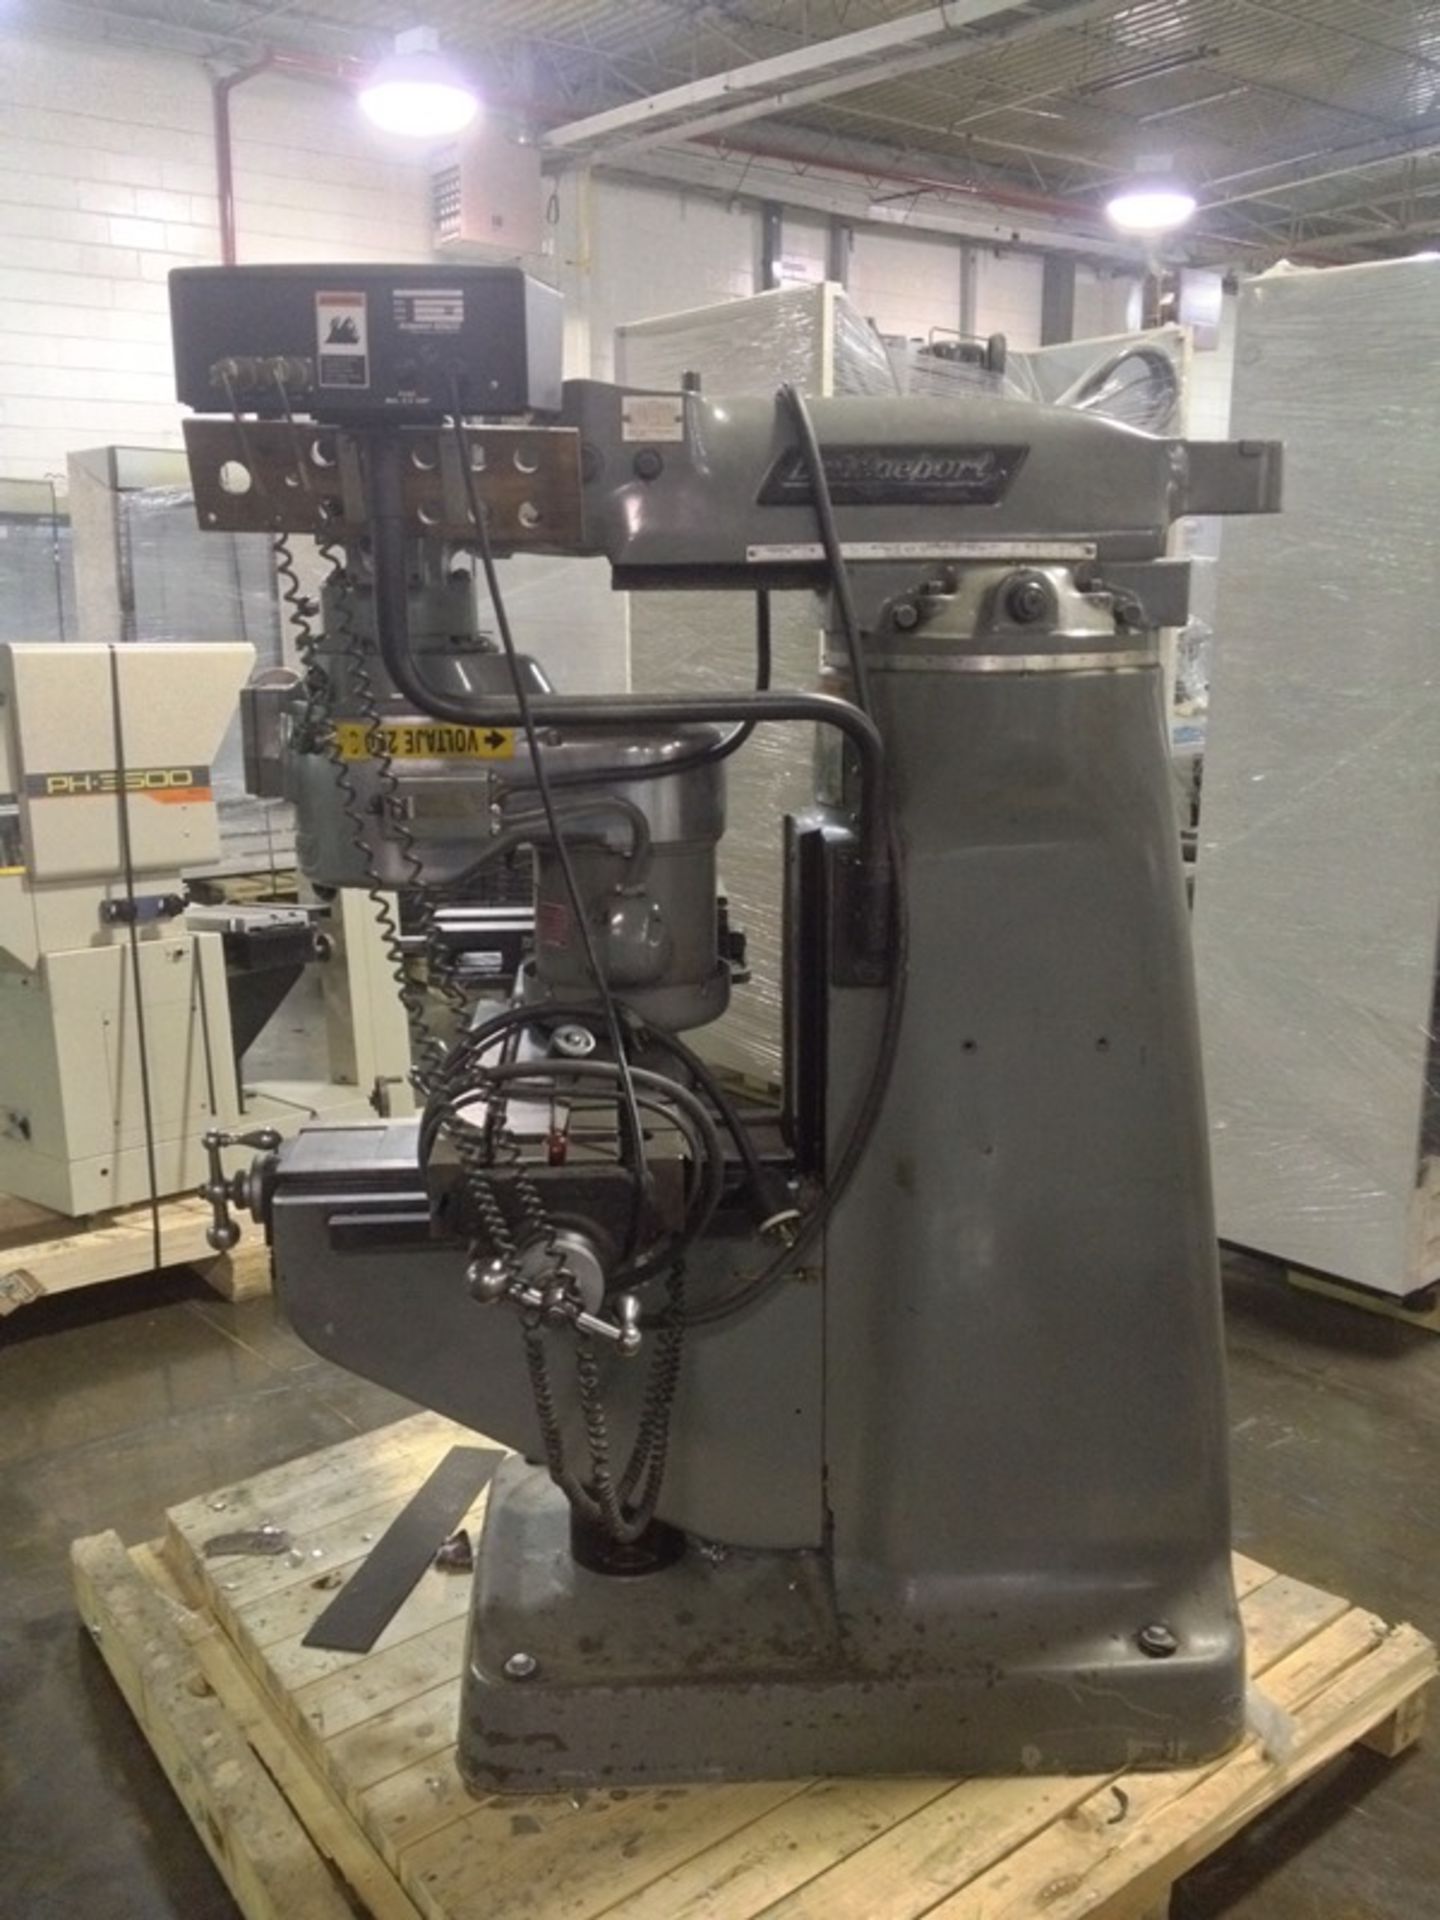 2HP Milling Machine, Brand: Bridgeport, Series: 2J 123204-2. Condition: Good, Location: Cd. Juarez - Image 7 of 20